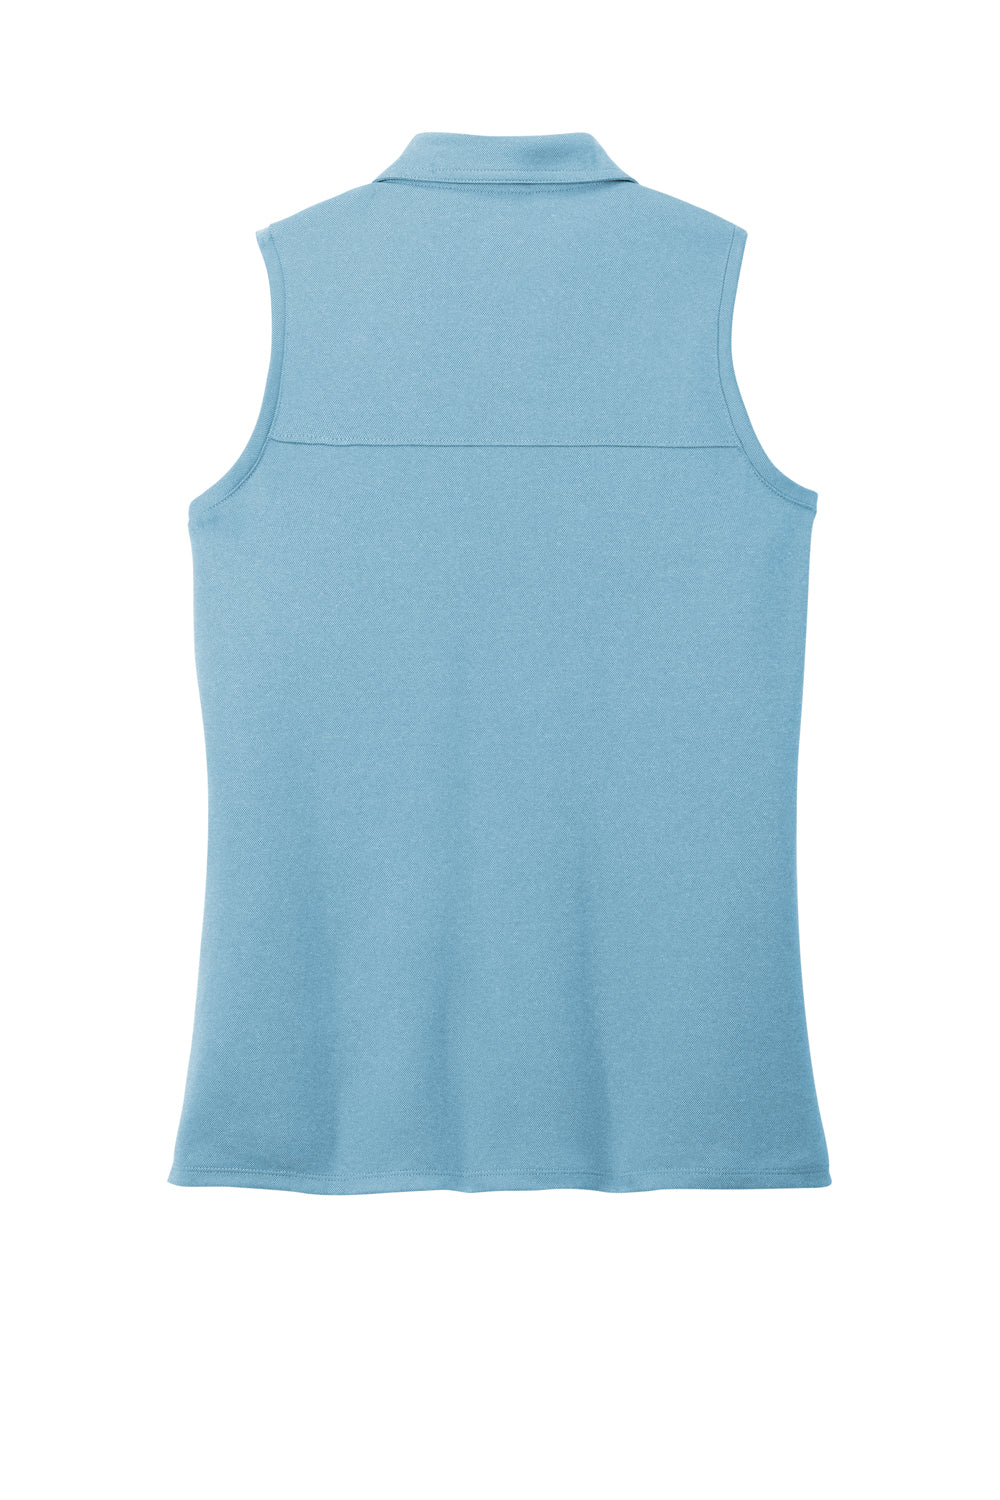 TravisMathew TM1WX001 Womens Coto Performance Wrinkle Resistant Sleeveless Polo Shirt Heather Brilliant Blue Flat Back